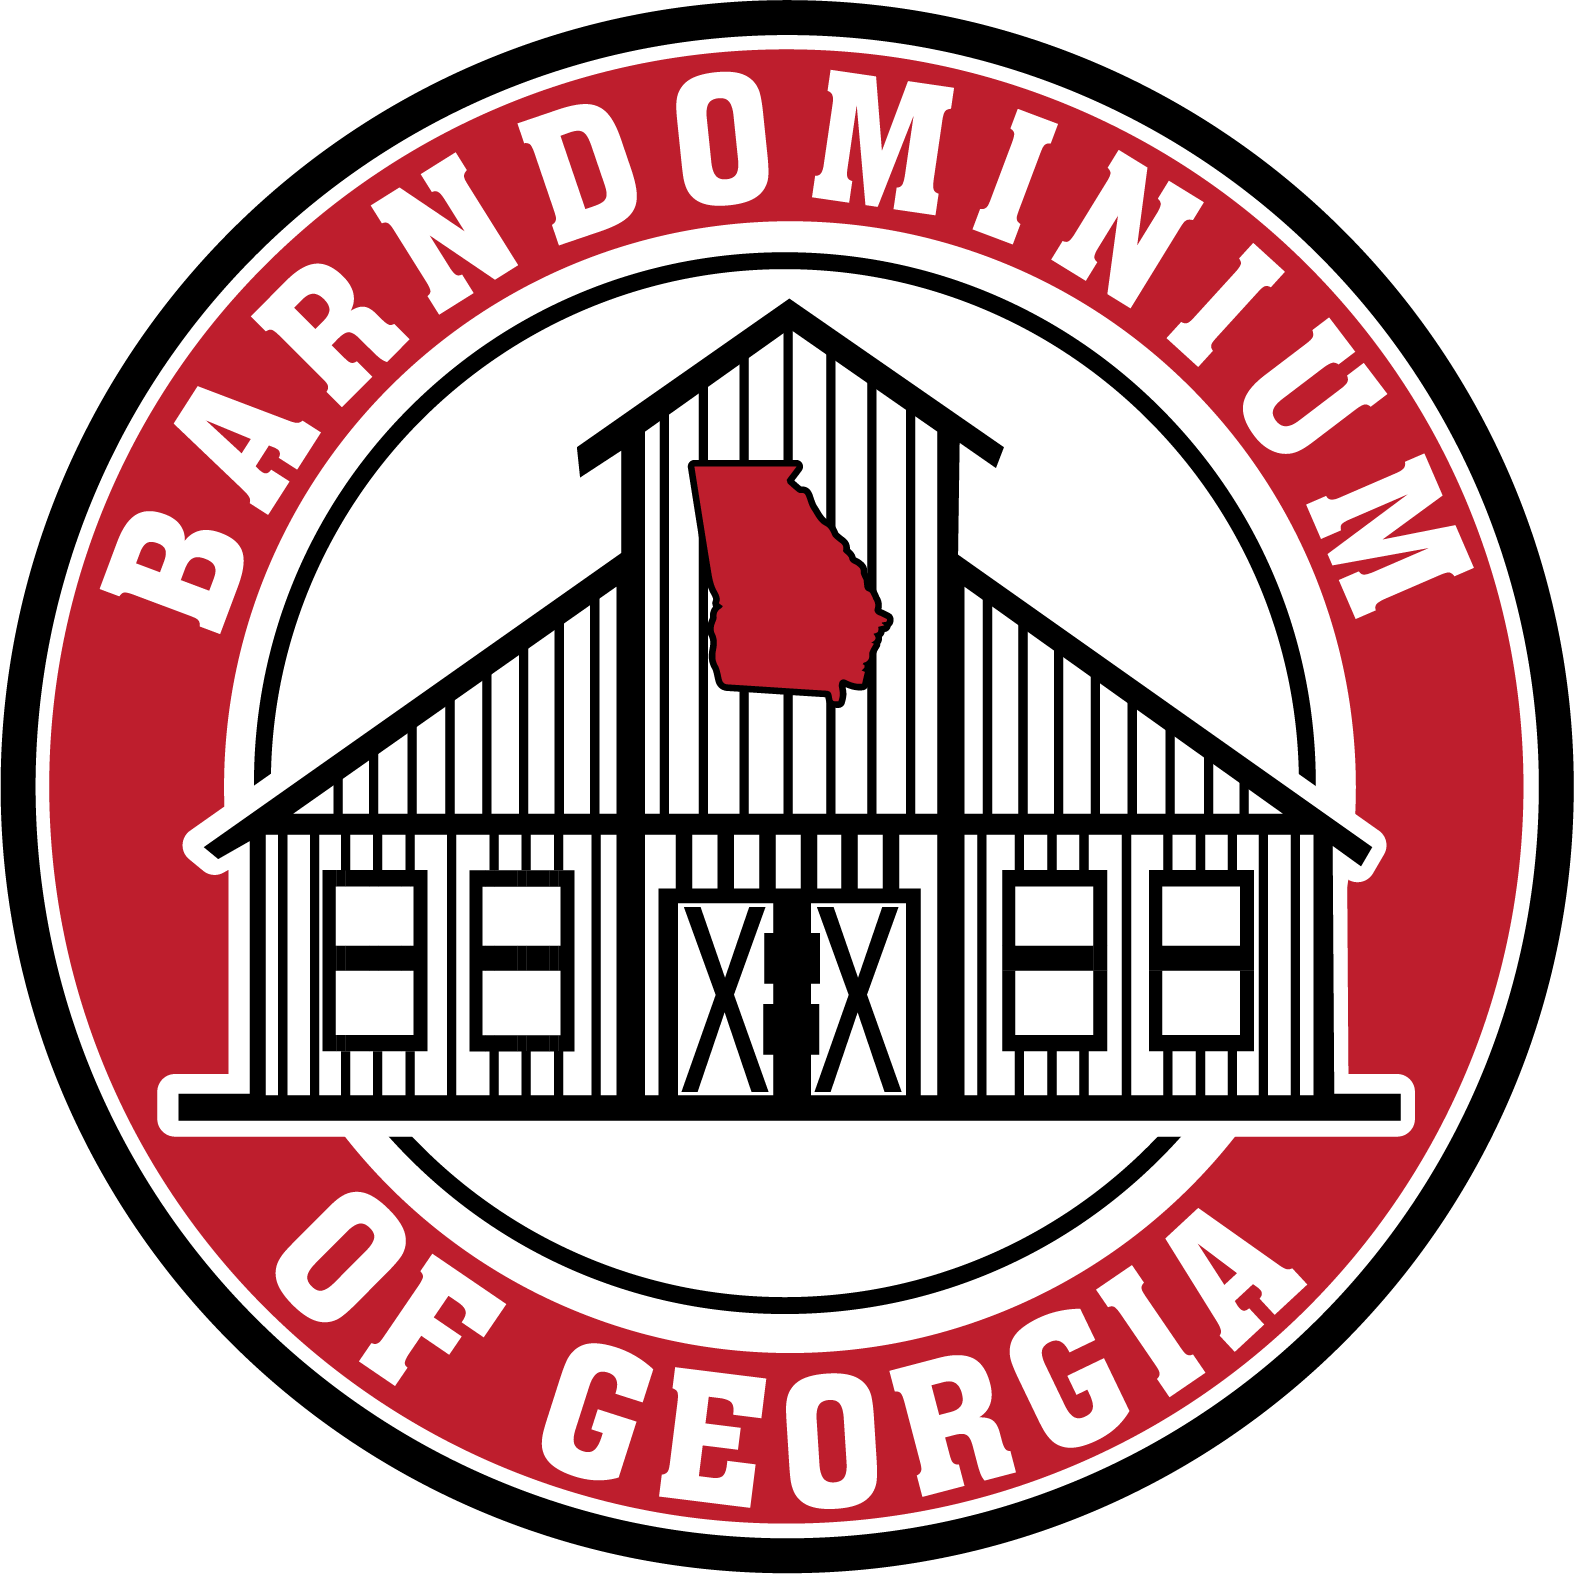 Barndominiums of GA